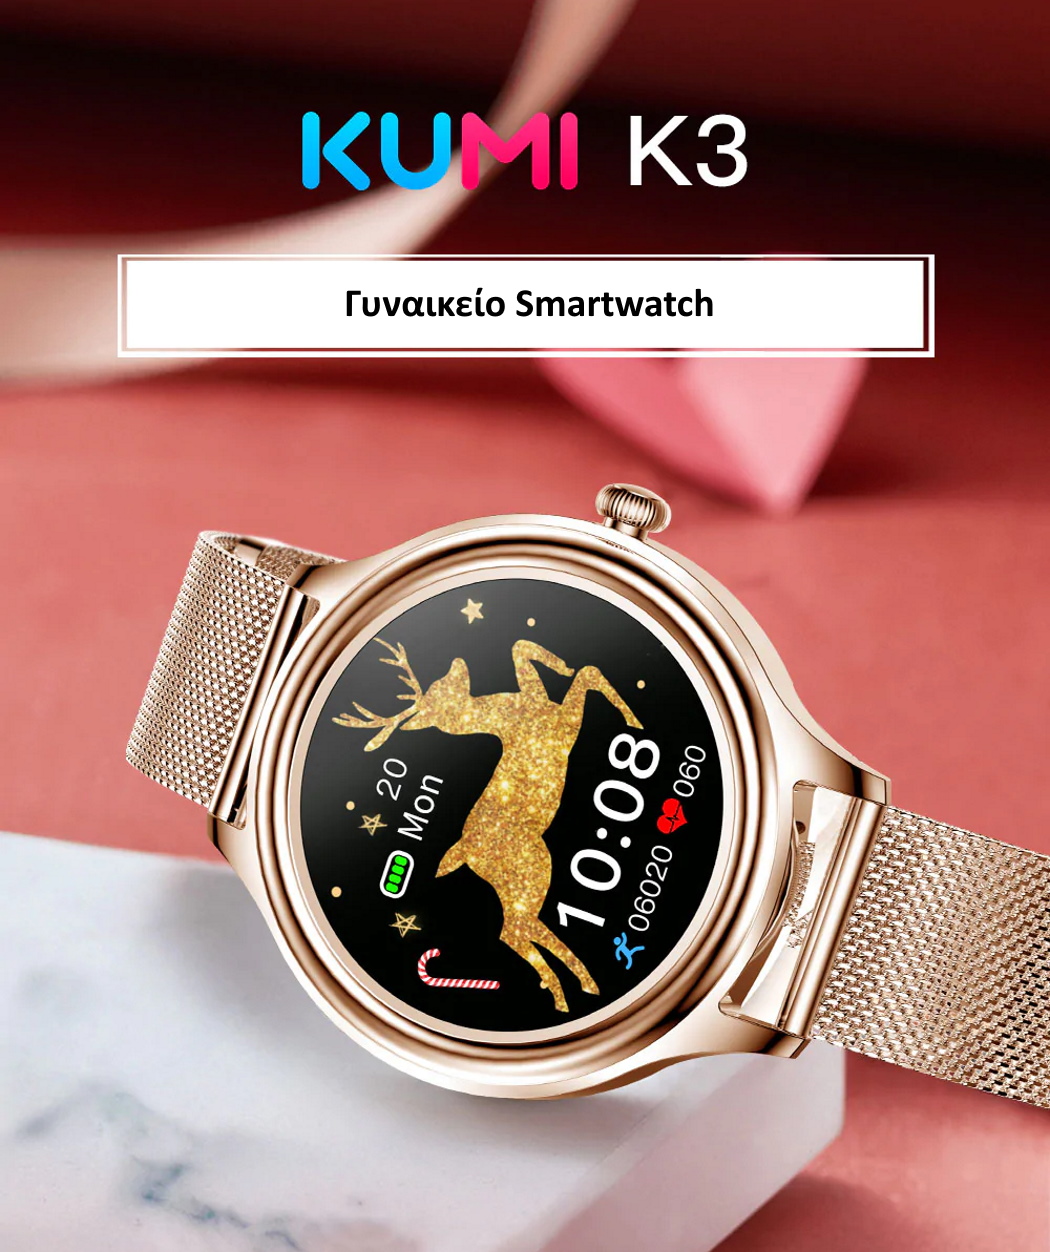 kumi k3 gunaikeio smartwatch